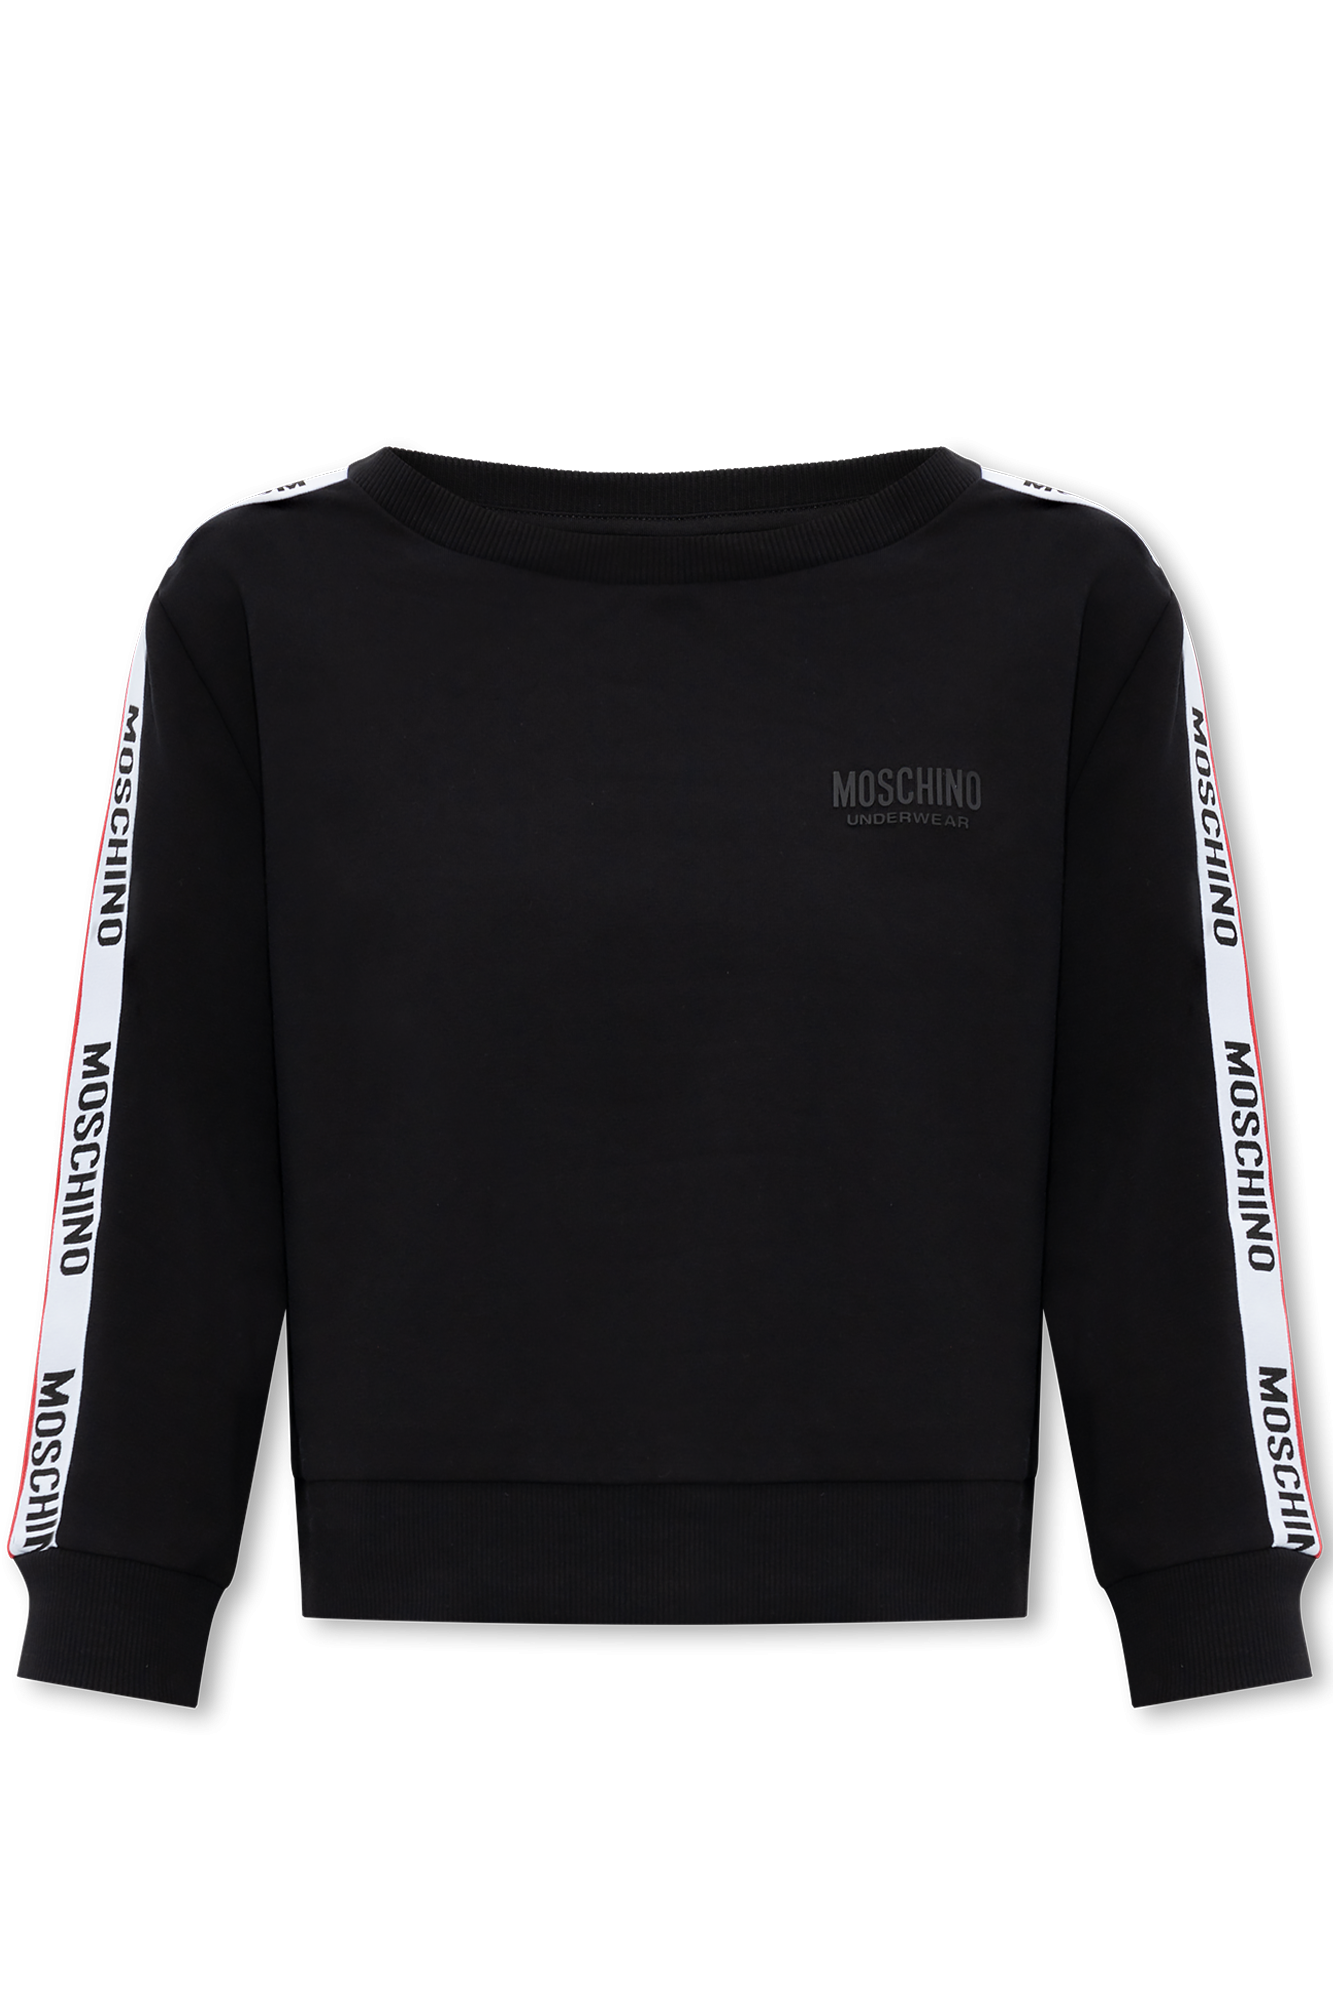 Black Sweatshirt with logo Moschino - Vitkac Australia